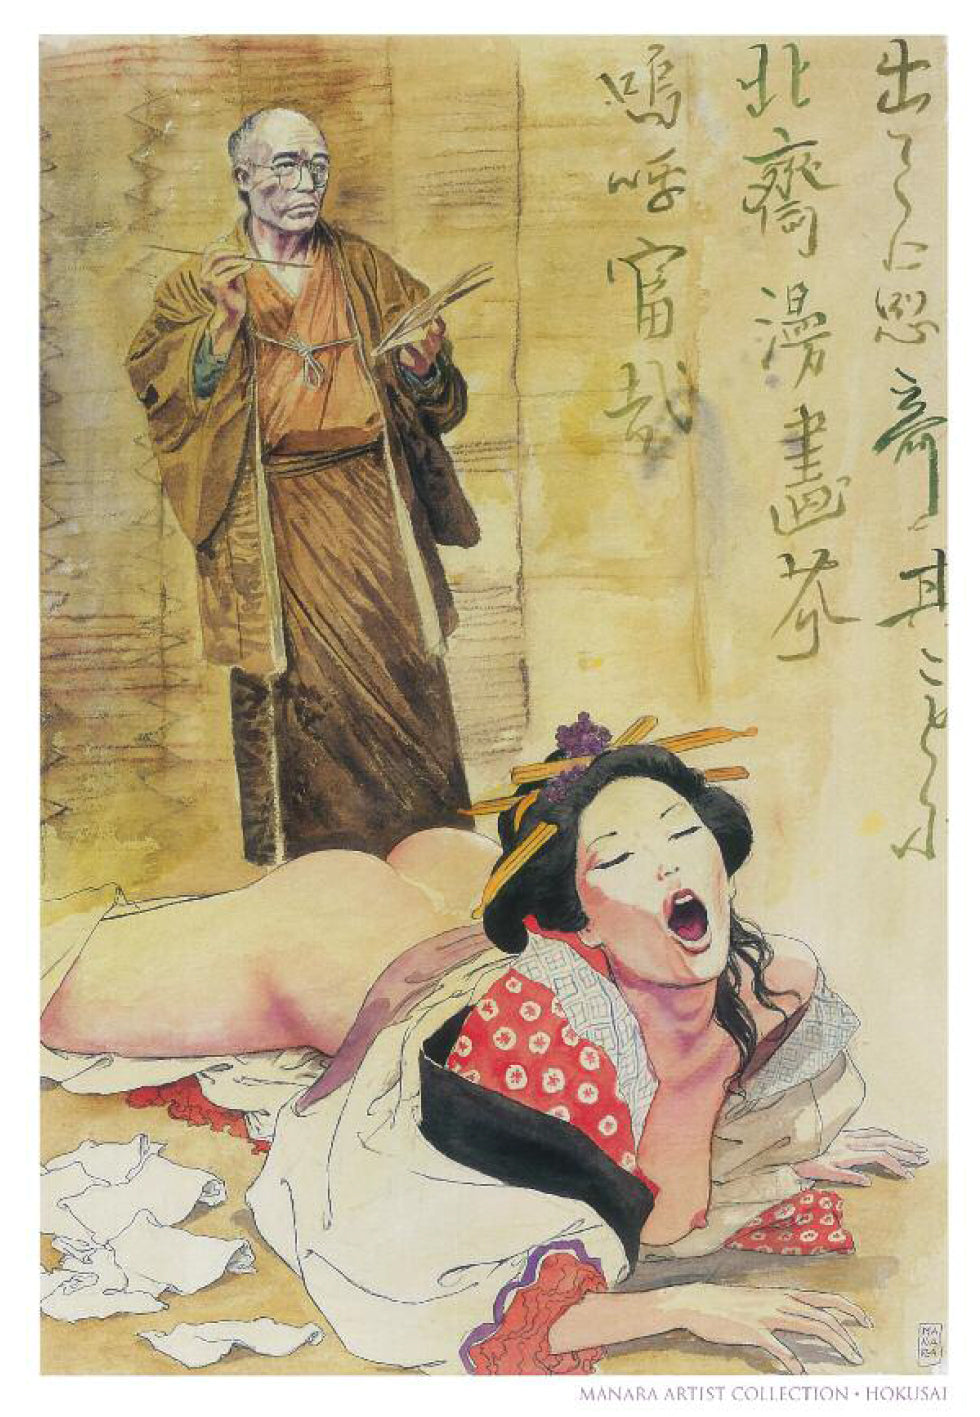 Manara Stampa Non Firmata M.A.C. - 20 - Hokusai